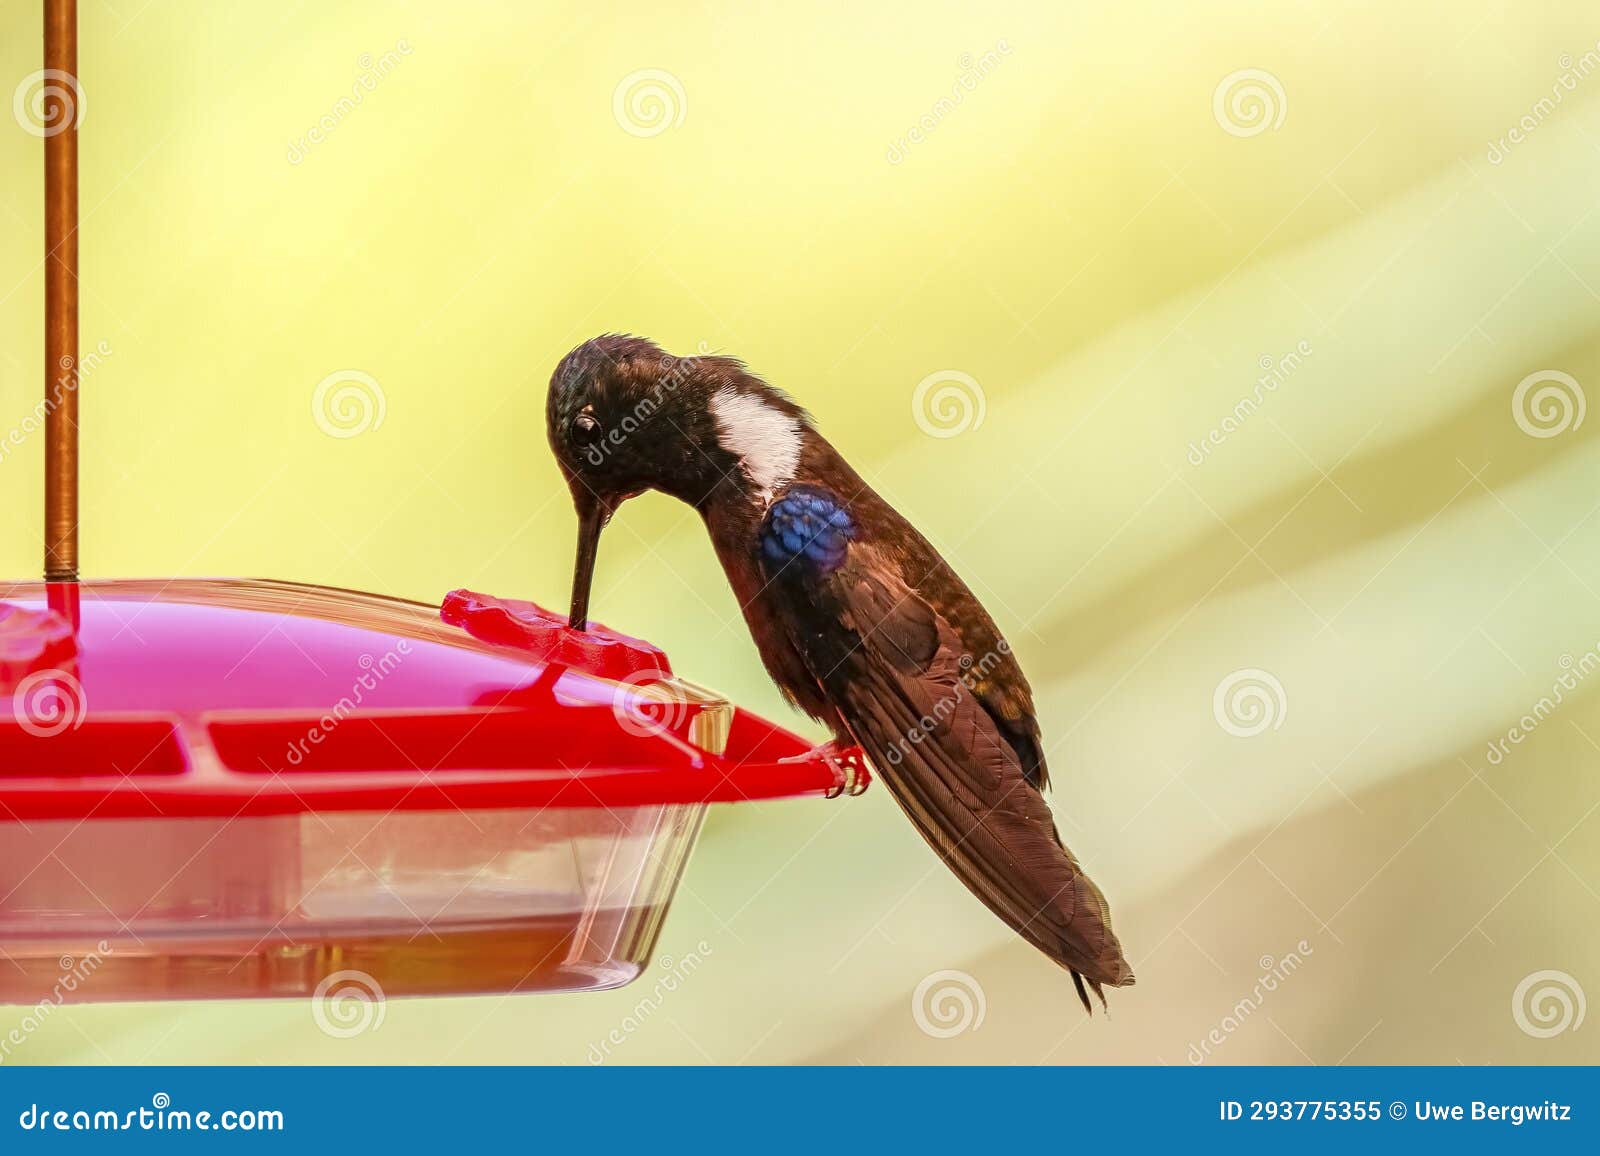 black inca hummingbird sucking sugar water at a hummingbird feeder, rogitama biodiversidad, colombia